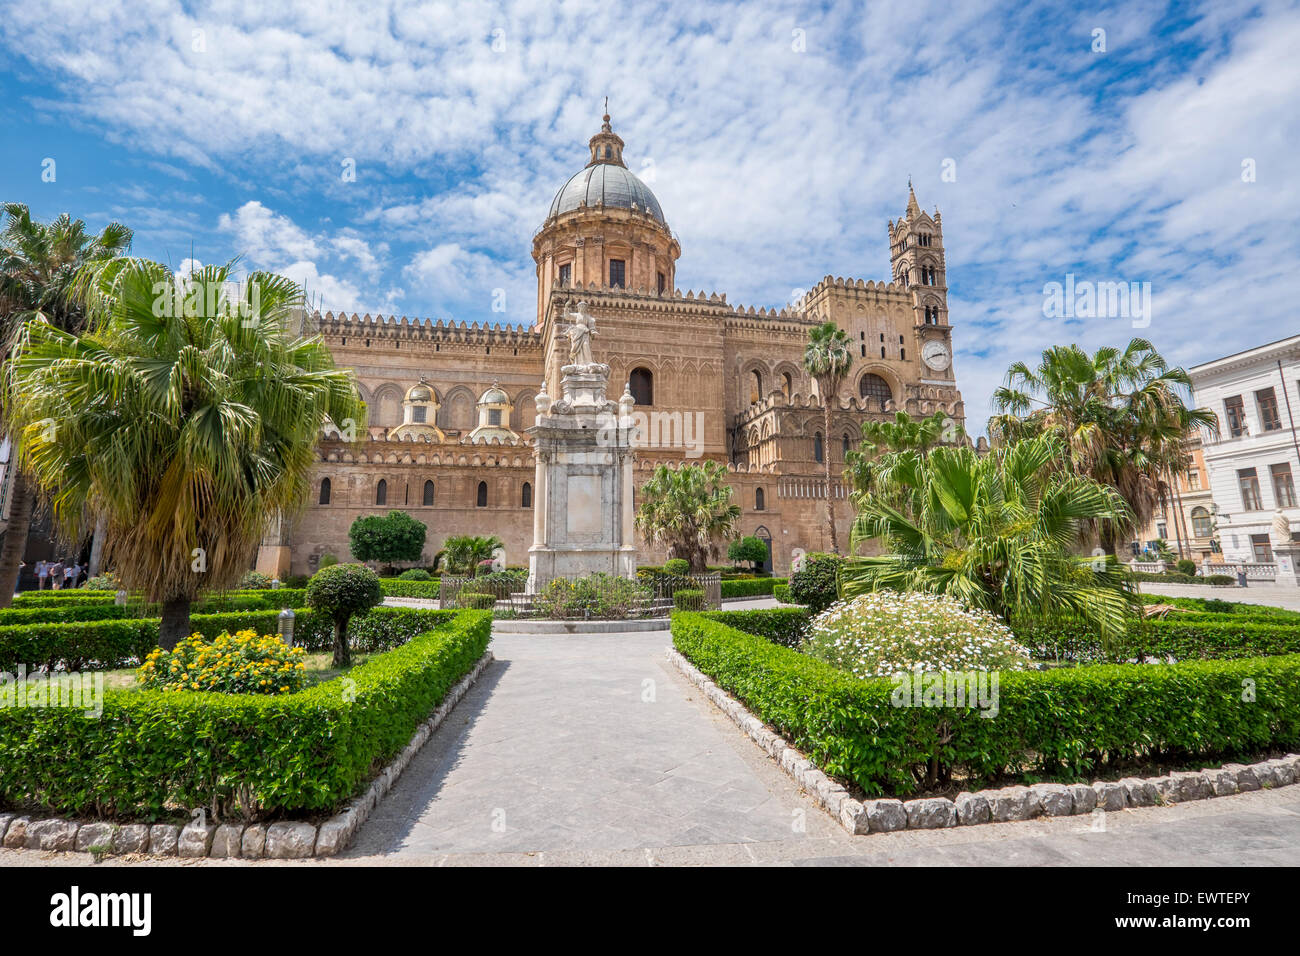 La Catedral de Palermo, Sicilia. Foto de stock